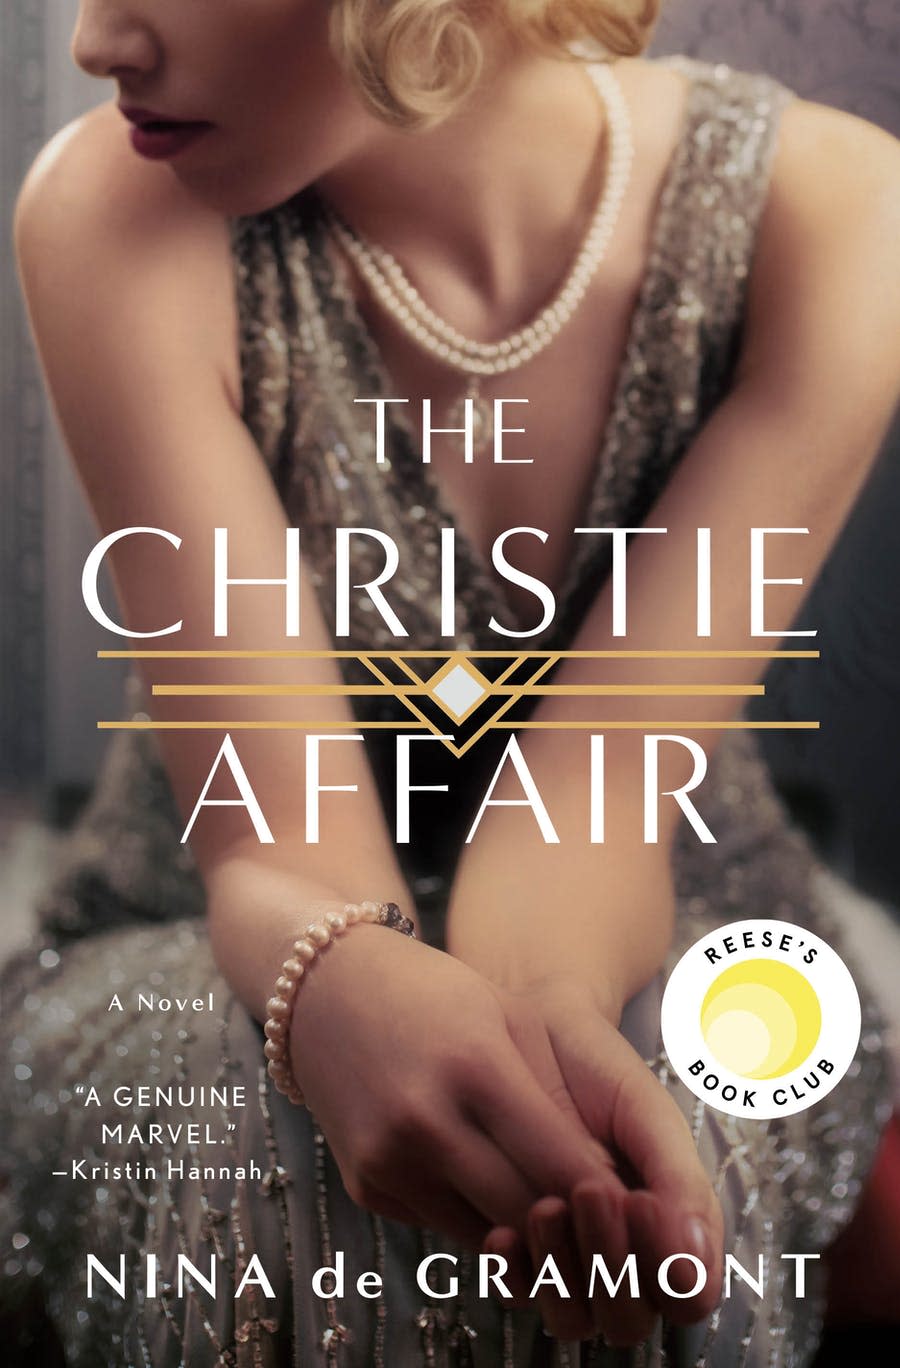 "The Christie Affair," by Nina de Gramont